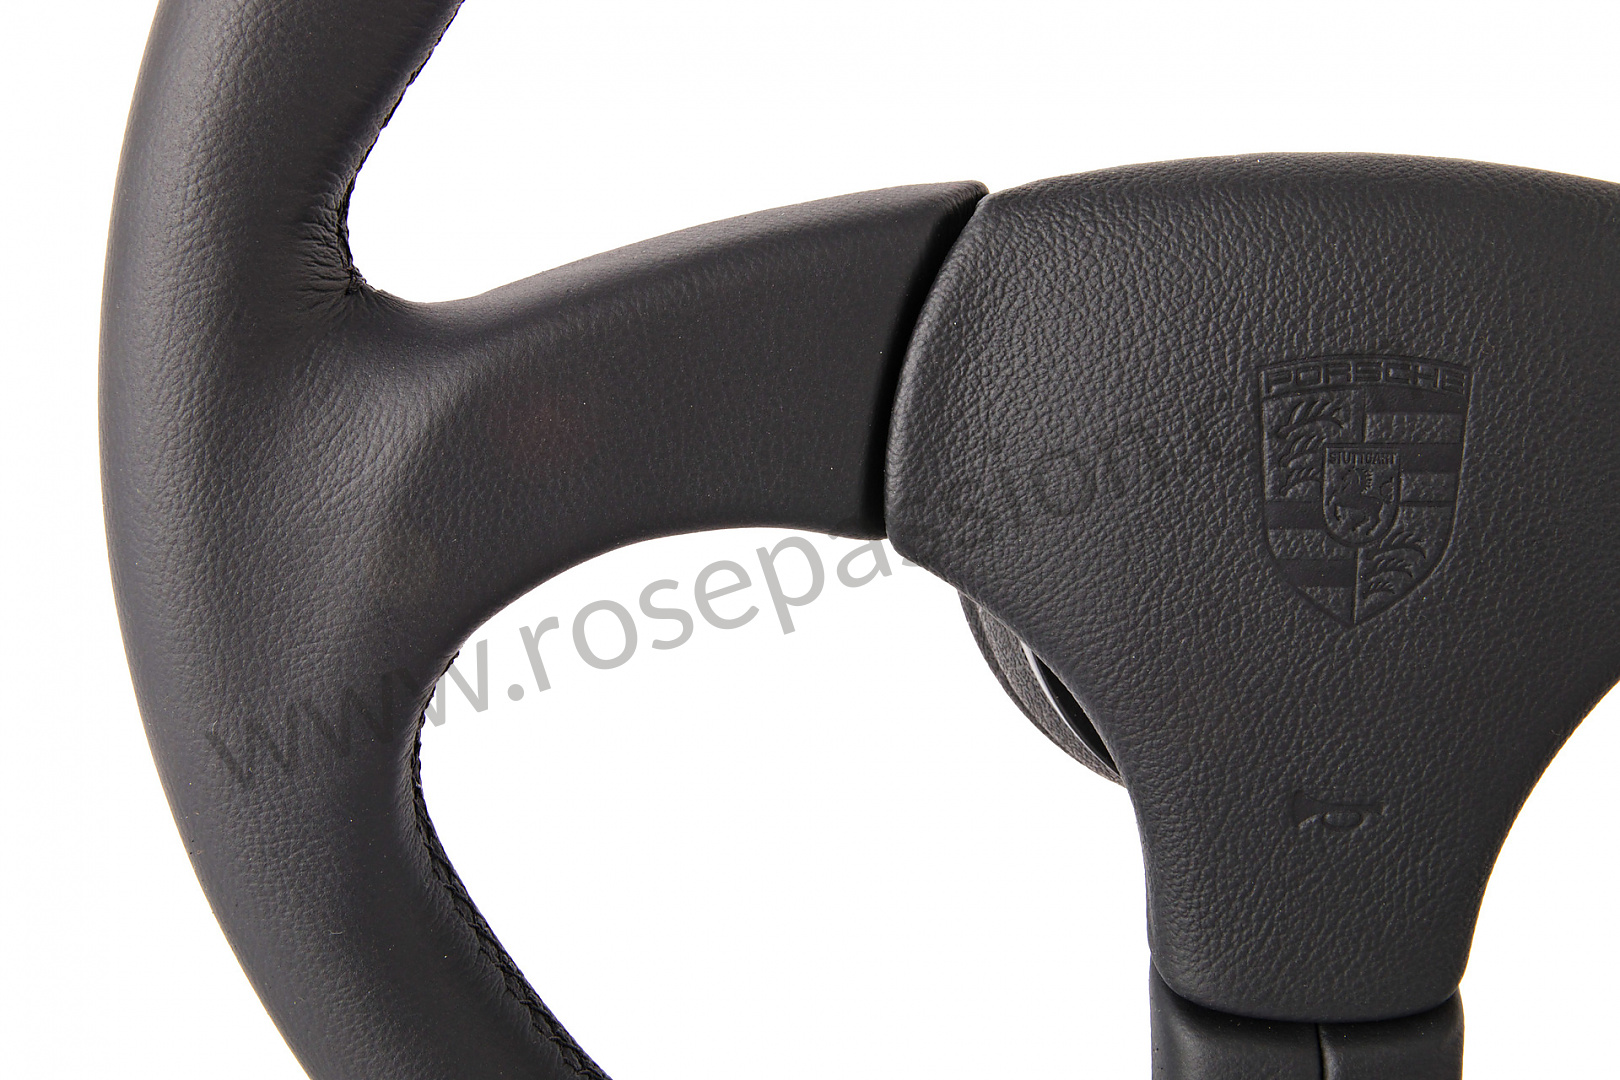 Volant direction Sport (95-00, airbag, cuir noir satiné) - V/A